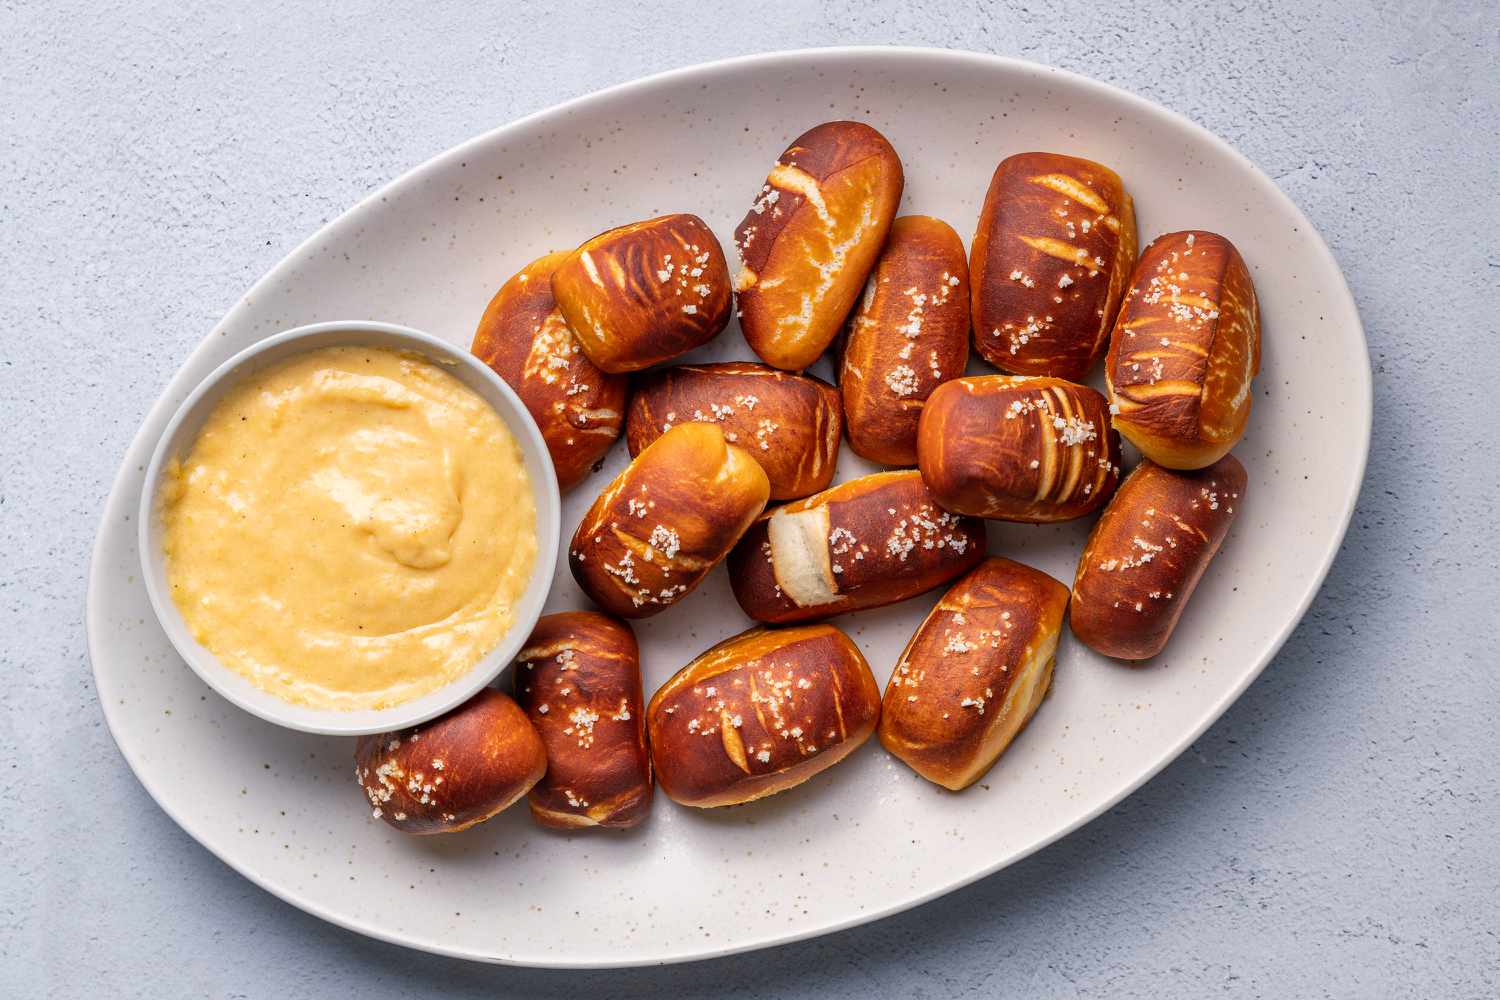 Soft pretzel bites served with cheese sauce